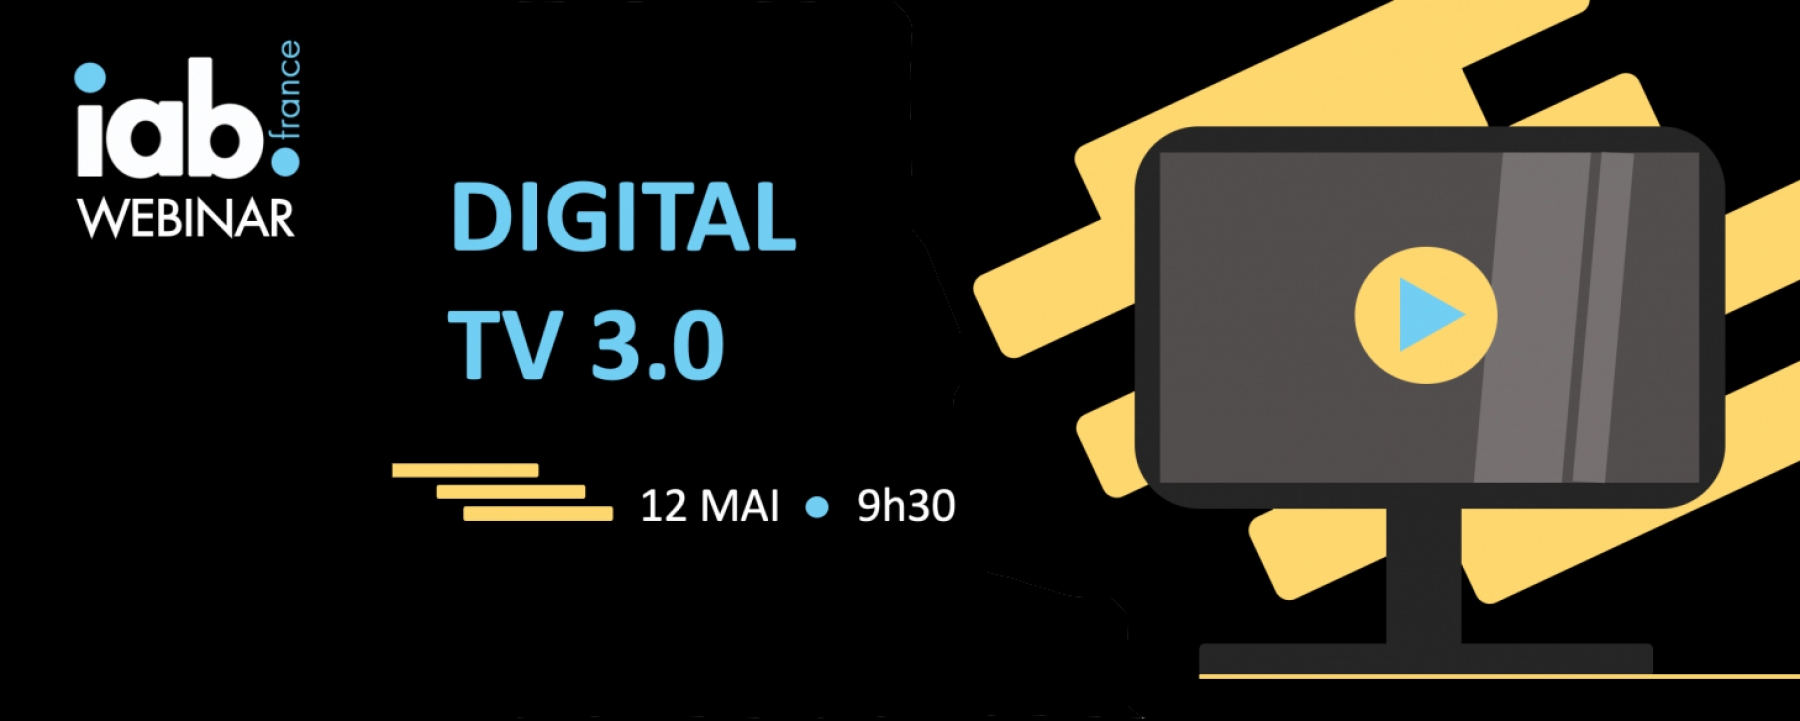 Digital TV 3.0, par IAB France le 12 mai 2021